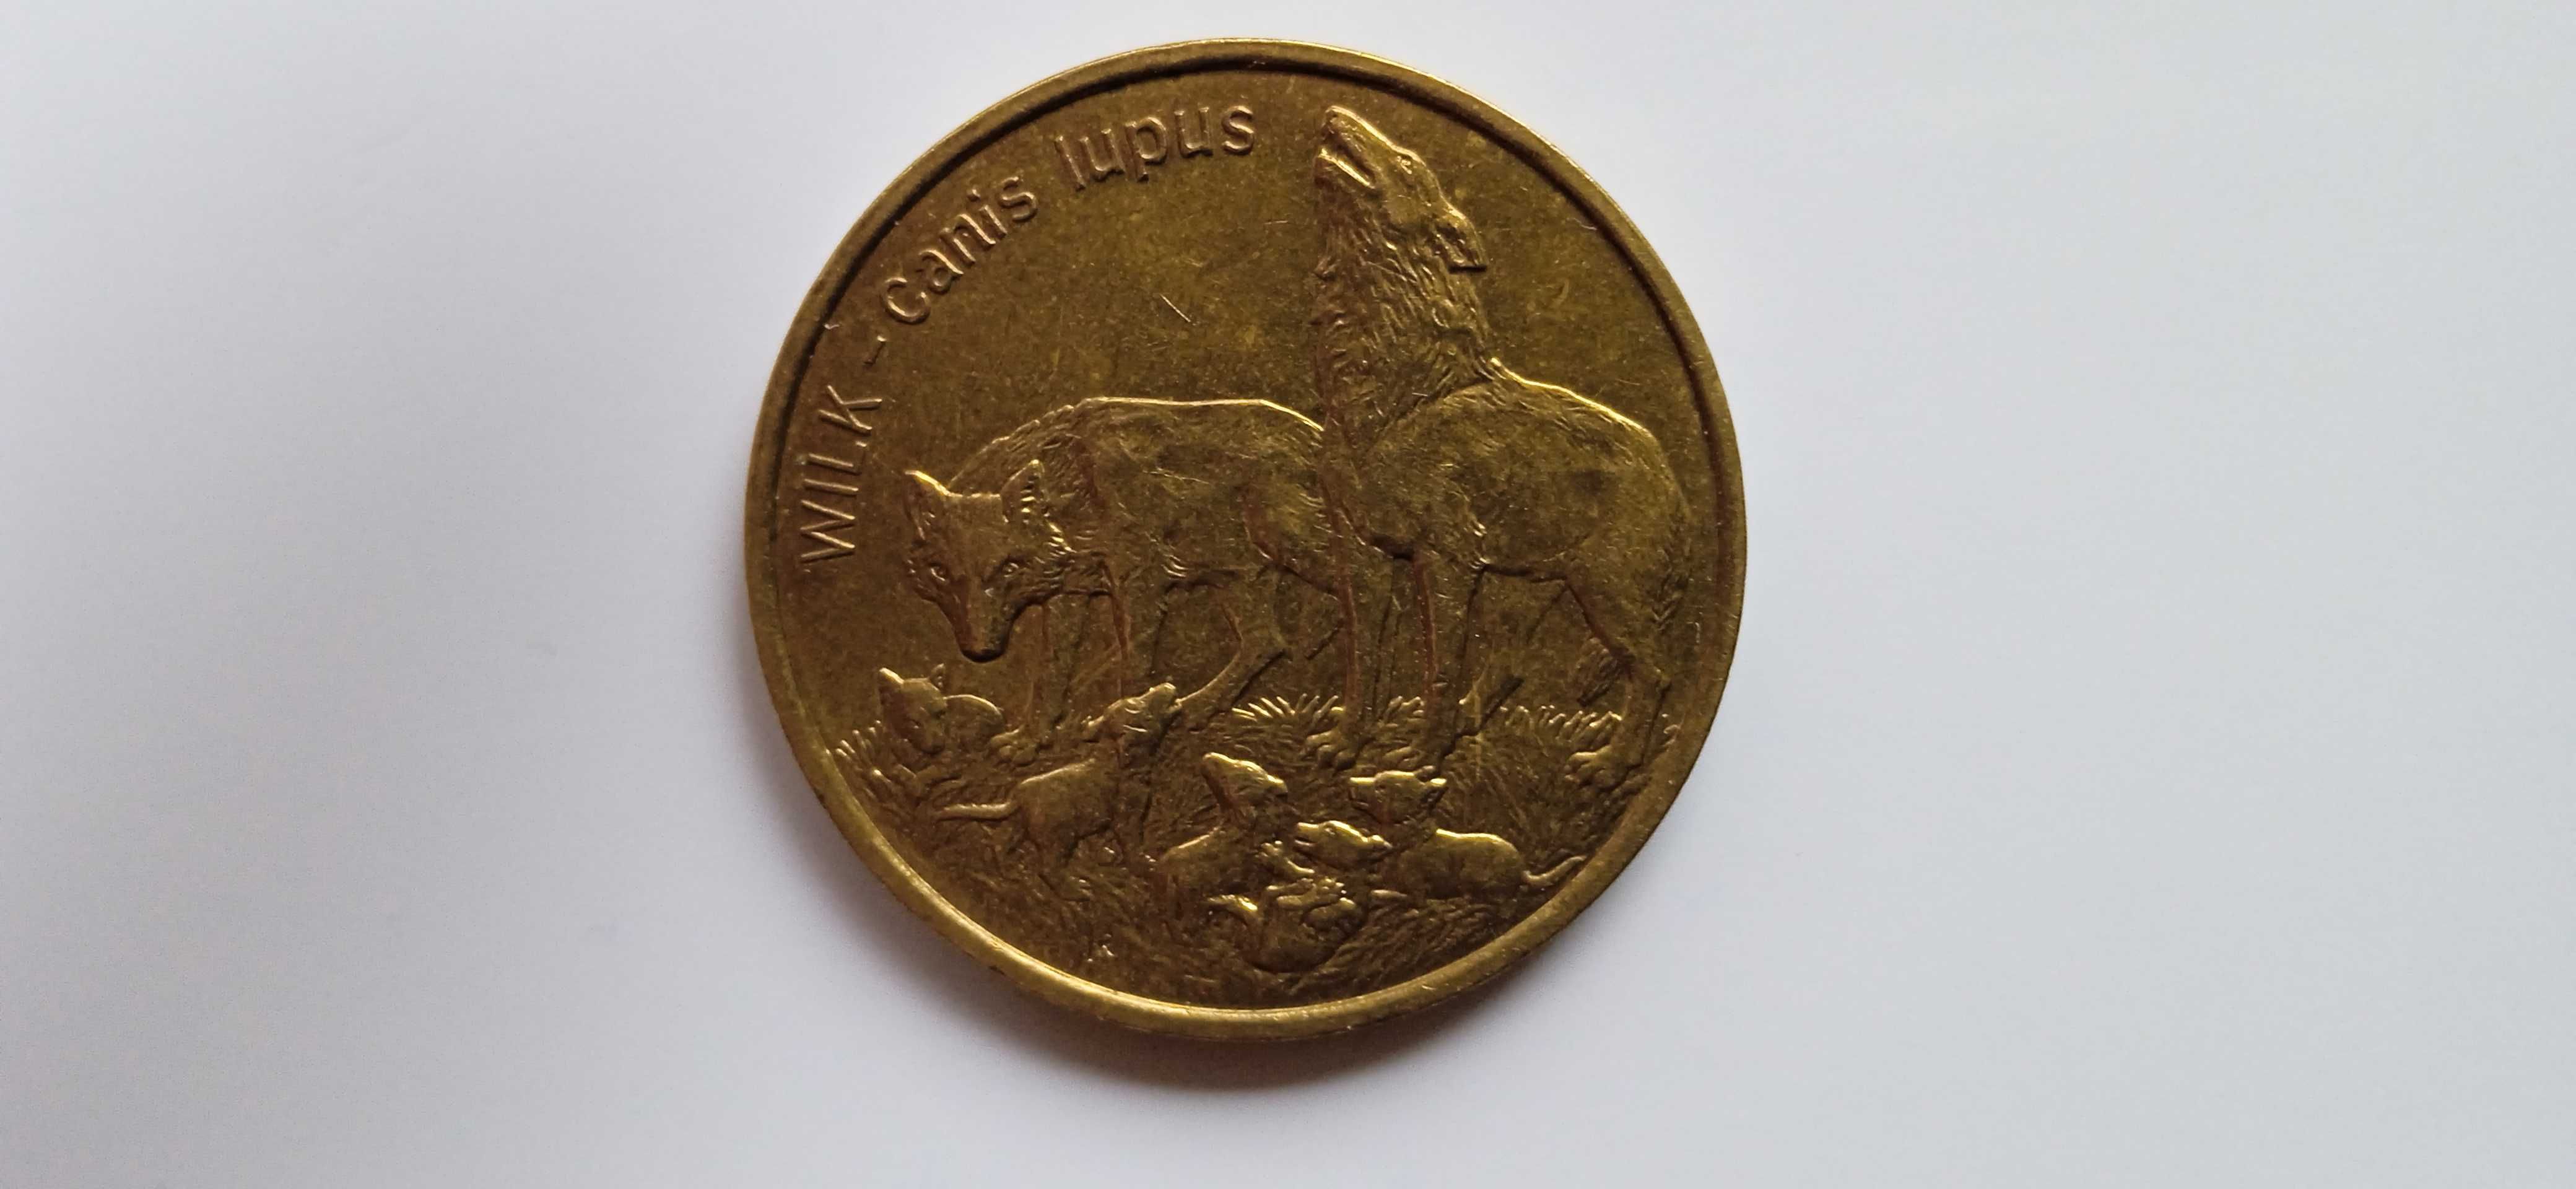 Moneta 2zł Wilki  1999 rok.